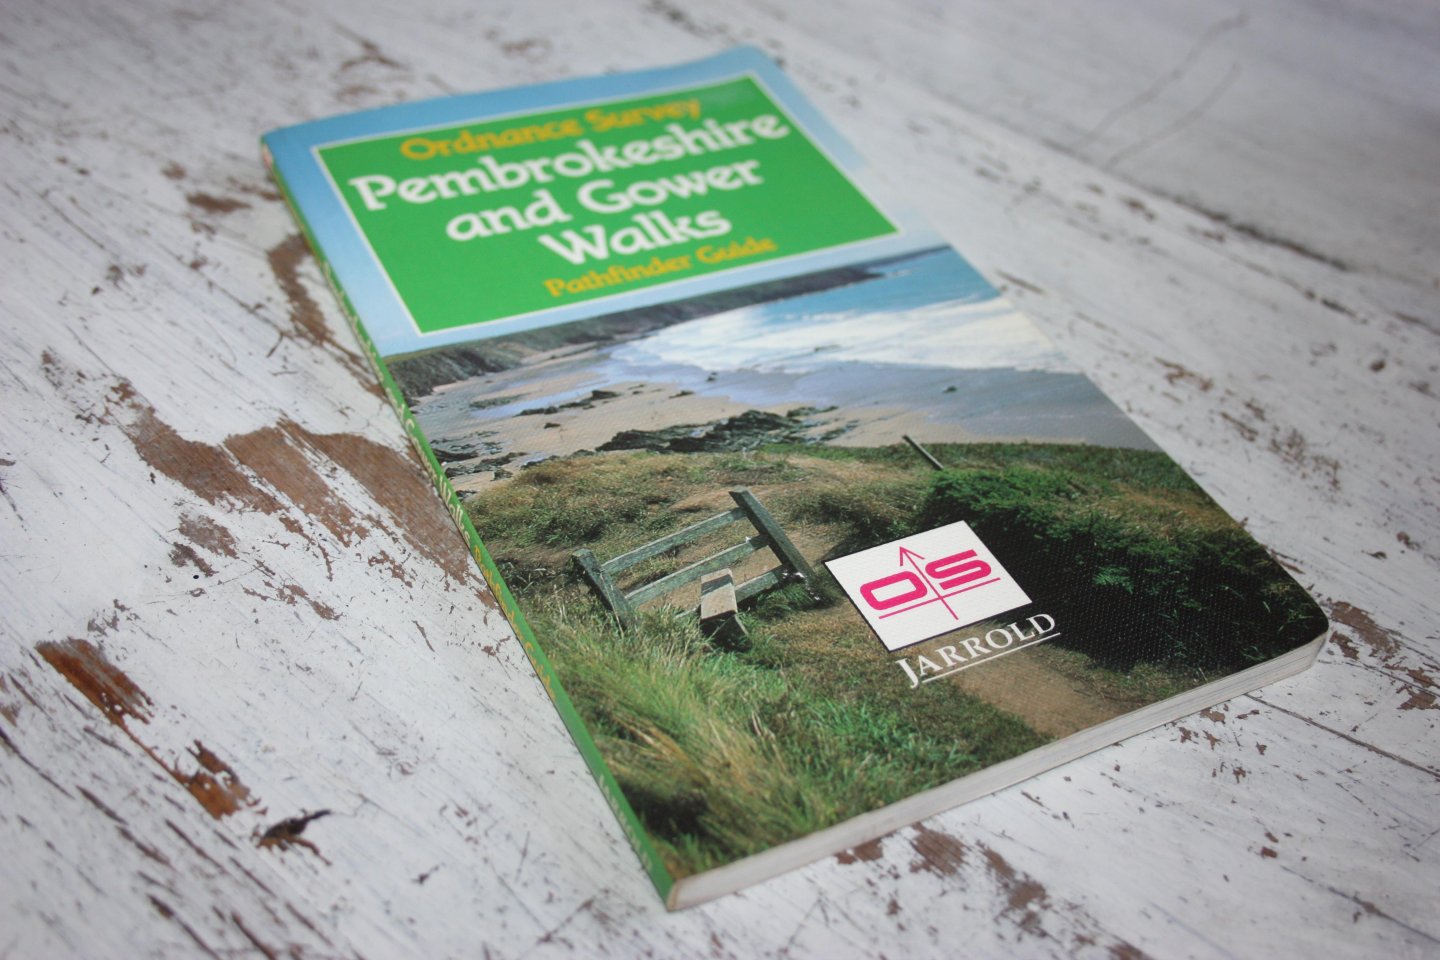 Conduit, Brian - Ordnance Survey Pembrokeshire and Gower Walks